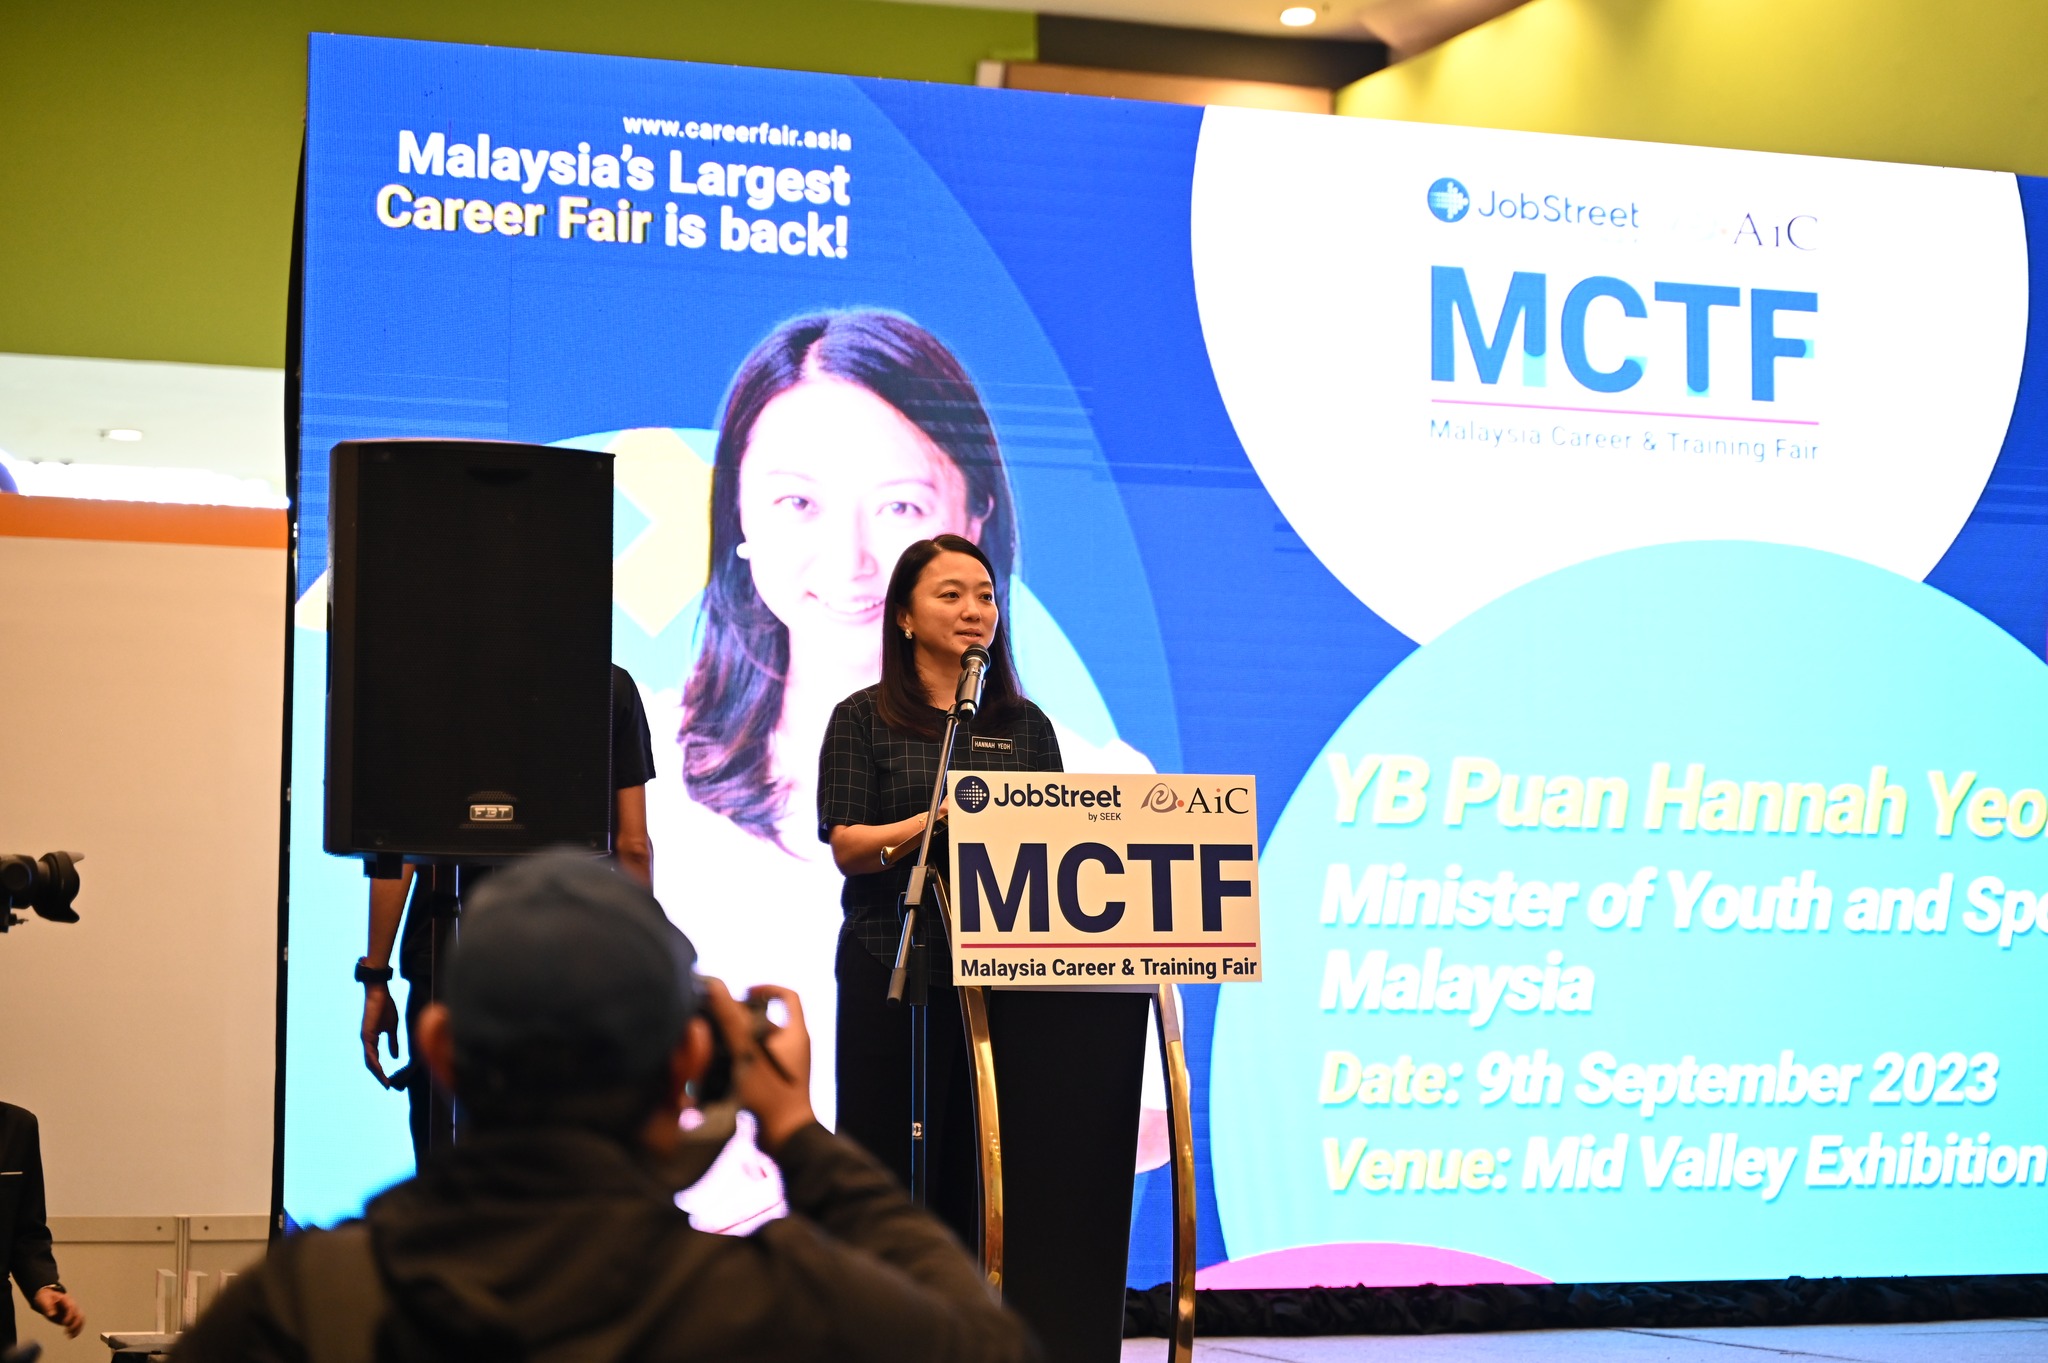 MCTF 2023 draws an impressive crowd of 30,000 jobseekers